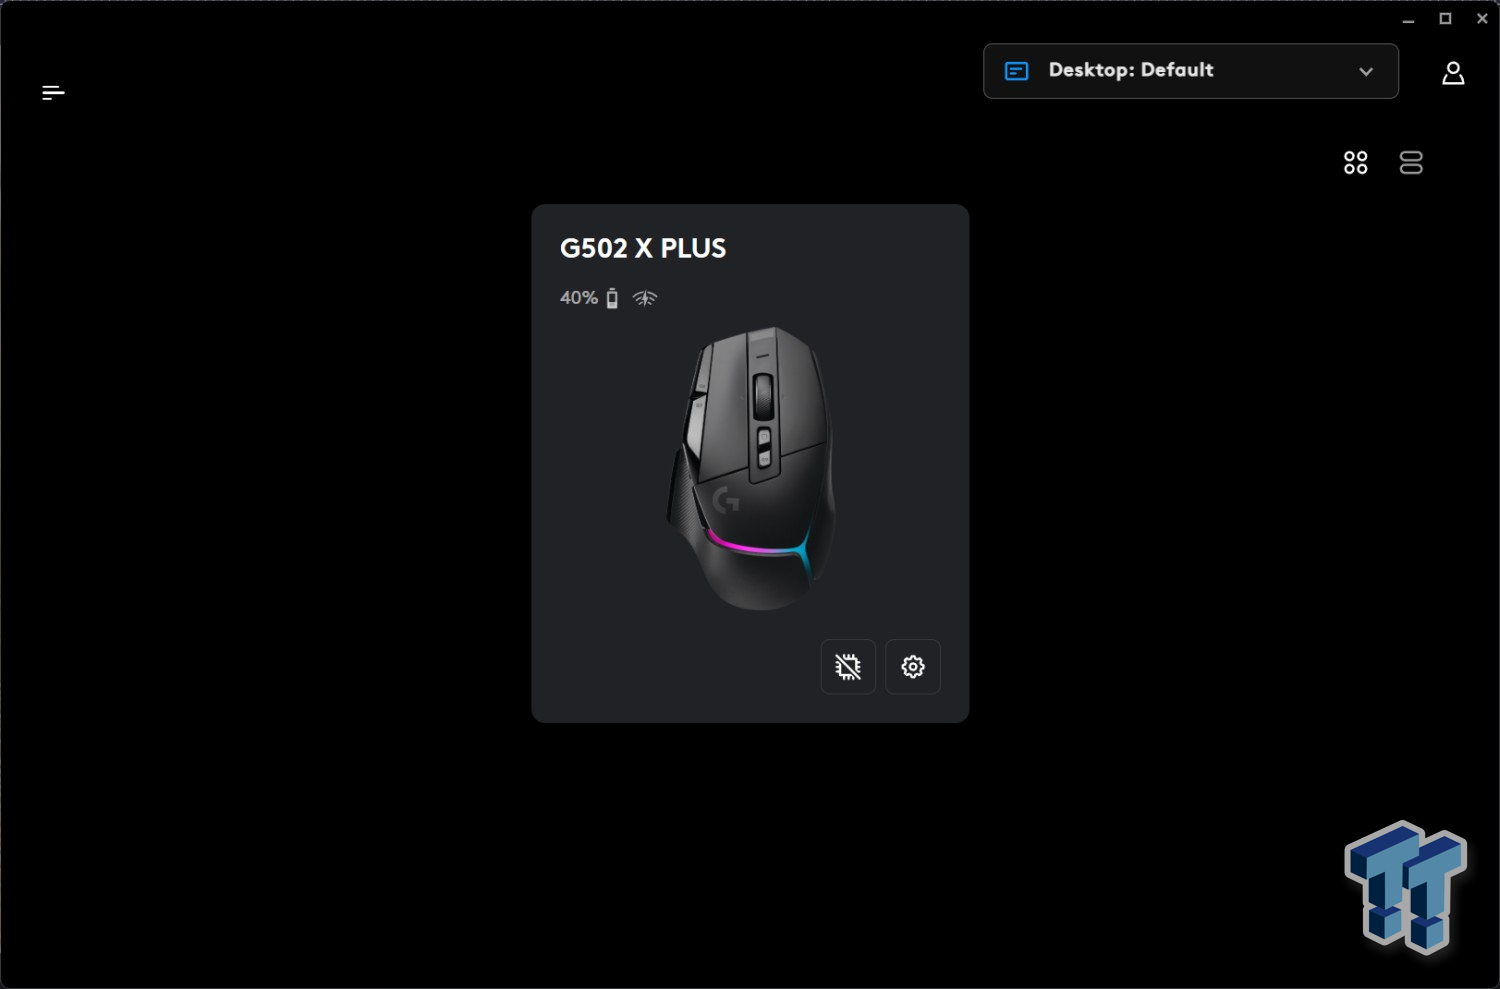 Logitech G502 LIGHTSPEED Wireless Gaming Mouse G502 X PLUS